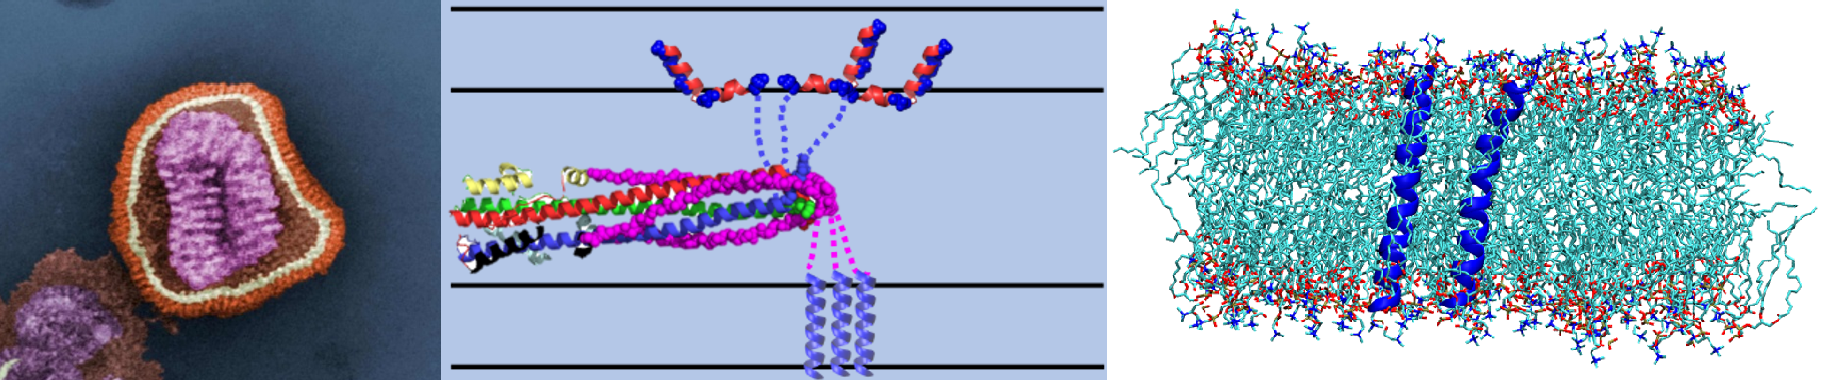 Representative image of influenza virus (left). Schematic diagram of influenza hemagglutinin protein (center). Simulation snapshot of hemagglutinin transmembrane domains (right).